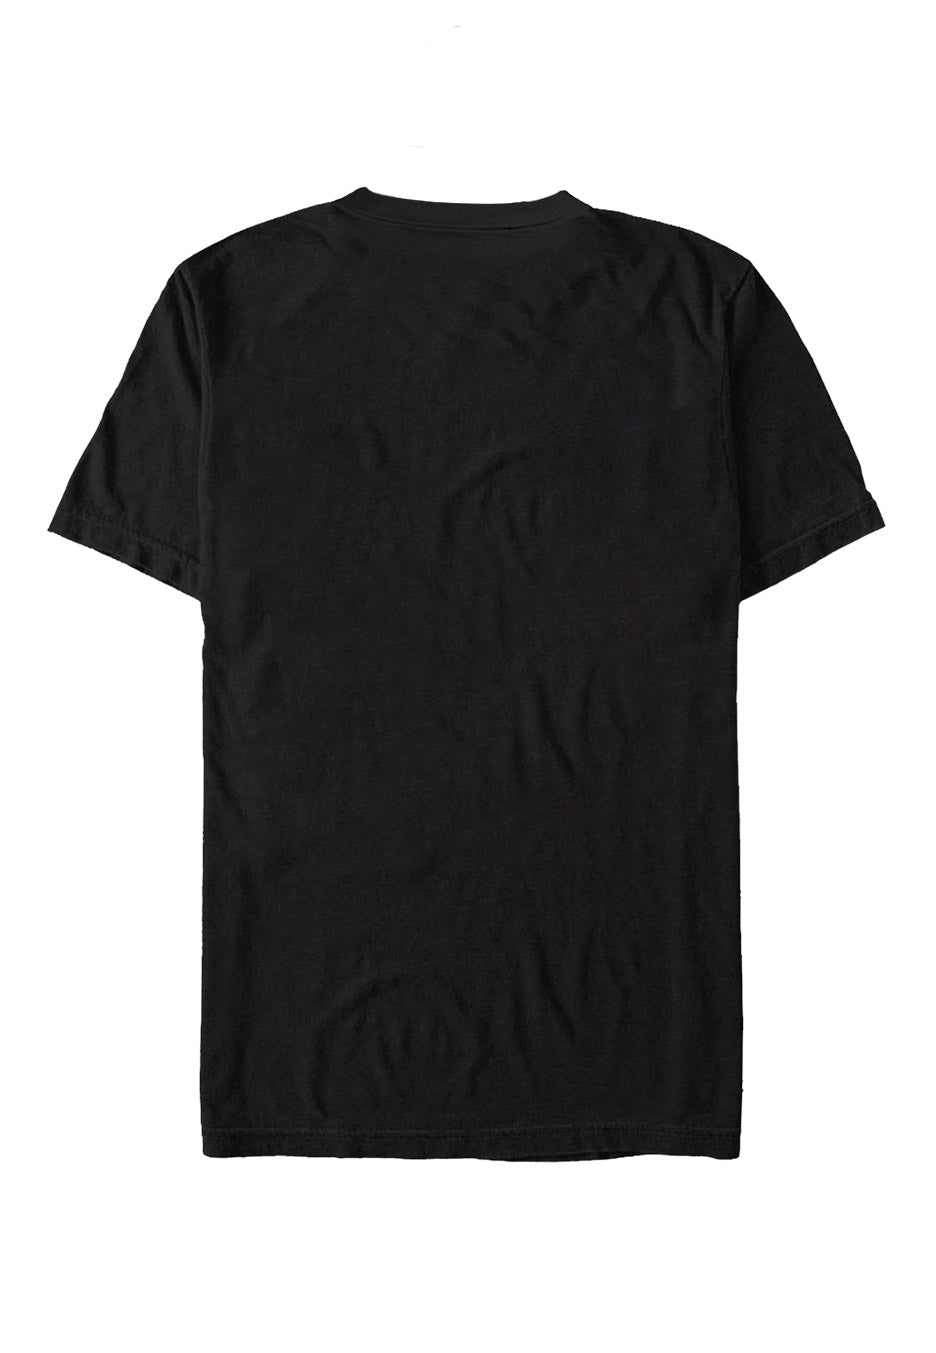 Avantasia - Griffin - T-Shirt